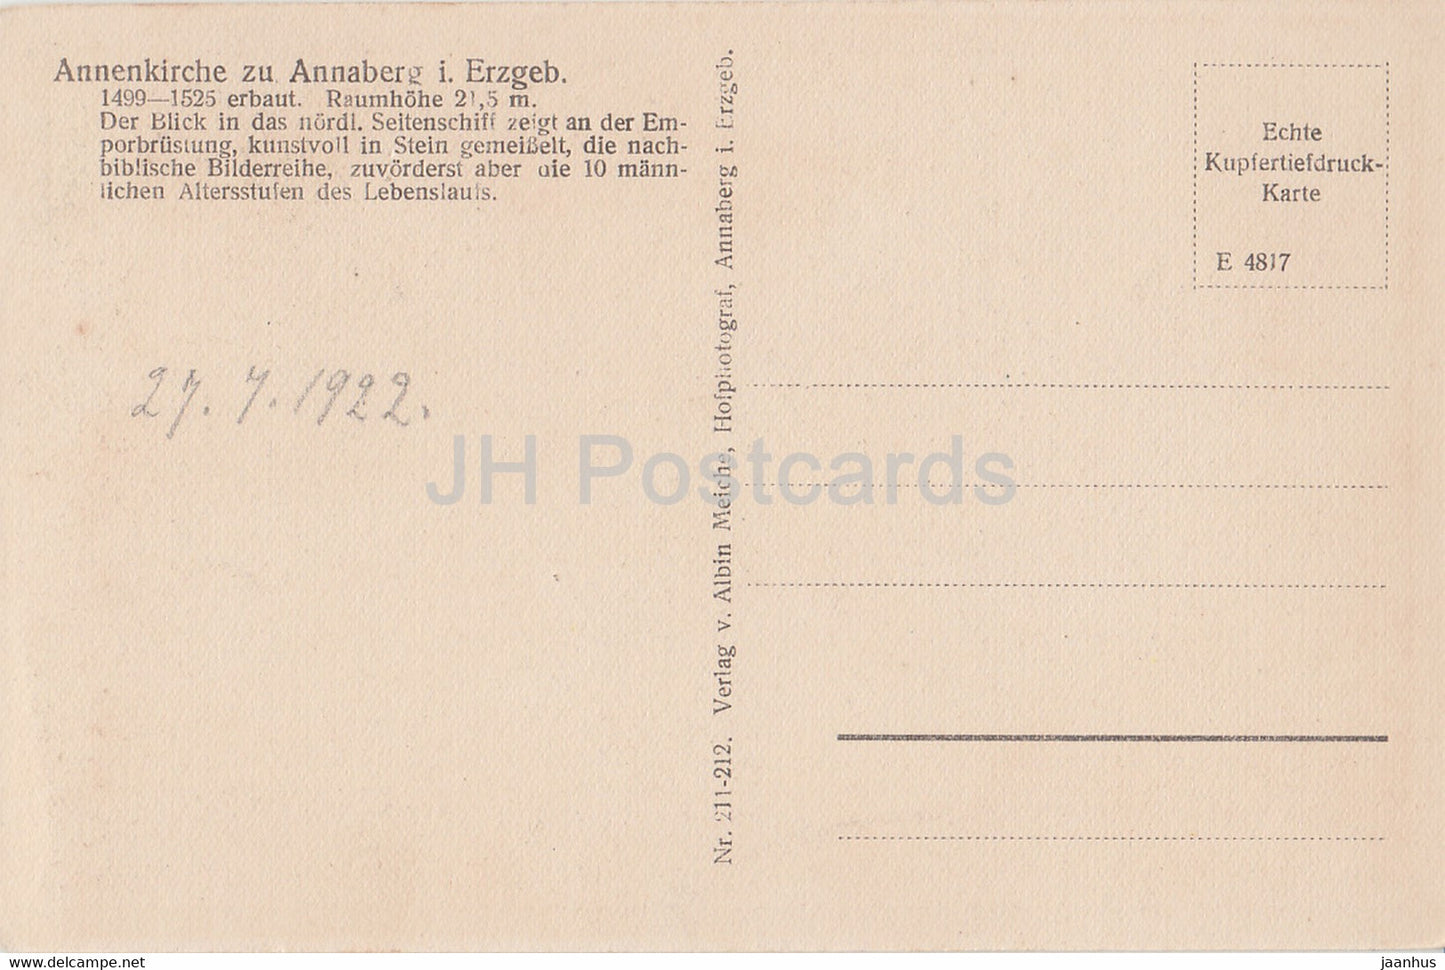 Annenkirche zu Annaberg i Erzgeb - church - old postcard - 1922 - Germany - unused